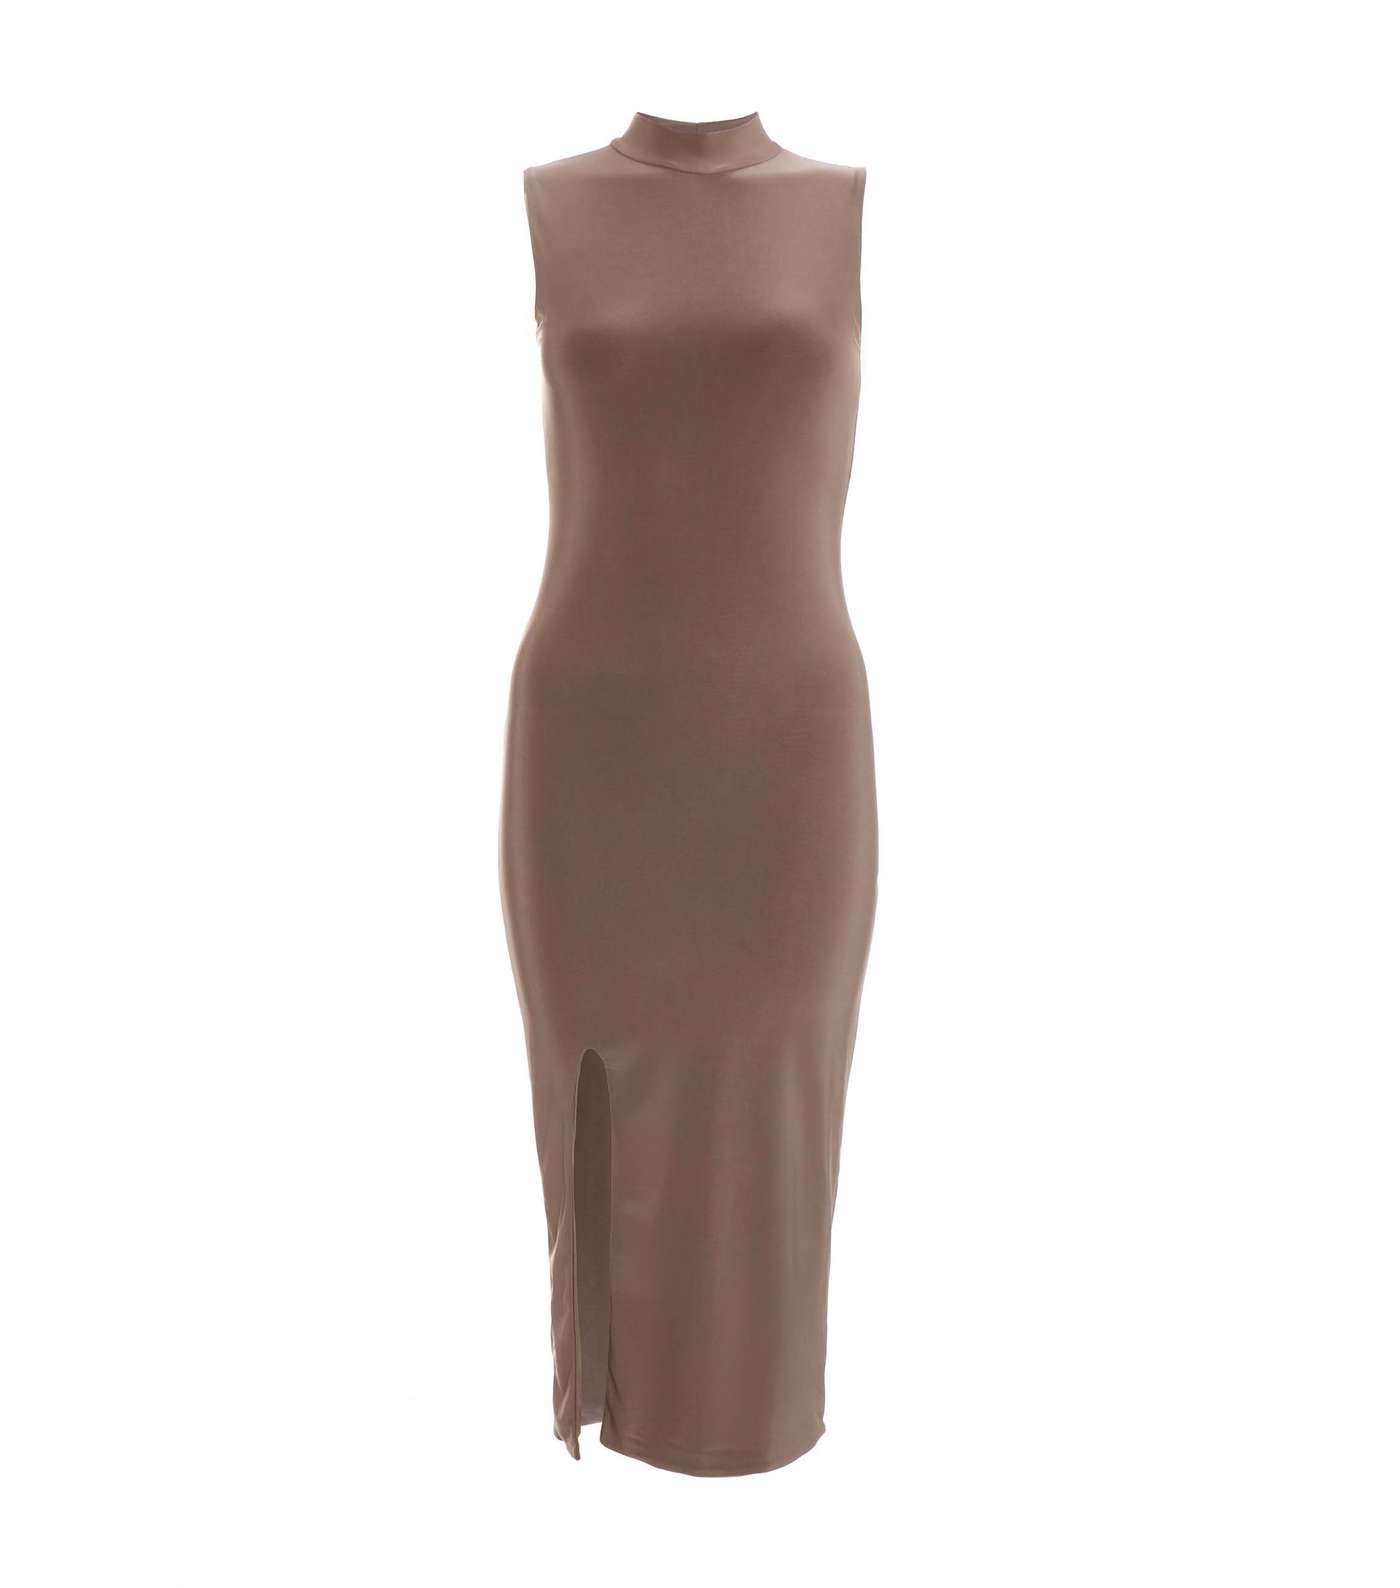 QUIZ Petite Dark Brown Jersey Sleeveless Midaxi Dress Image 4